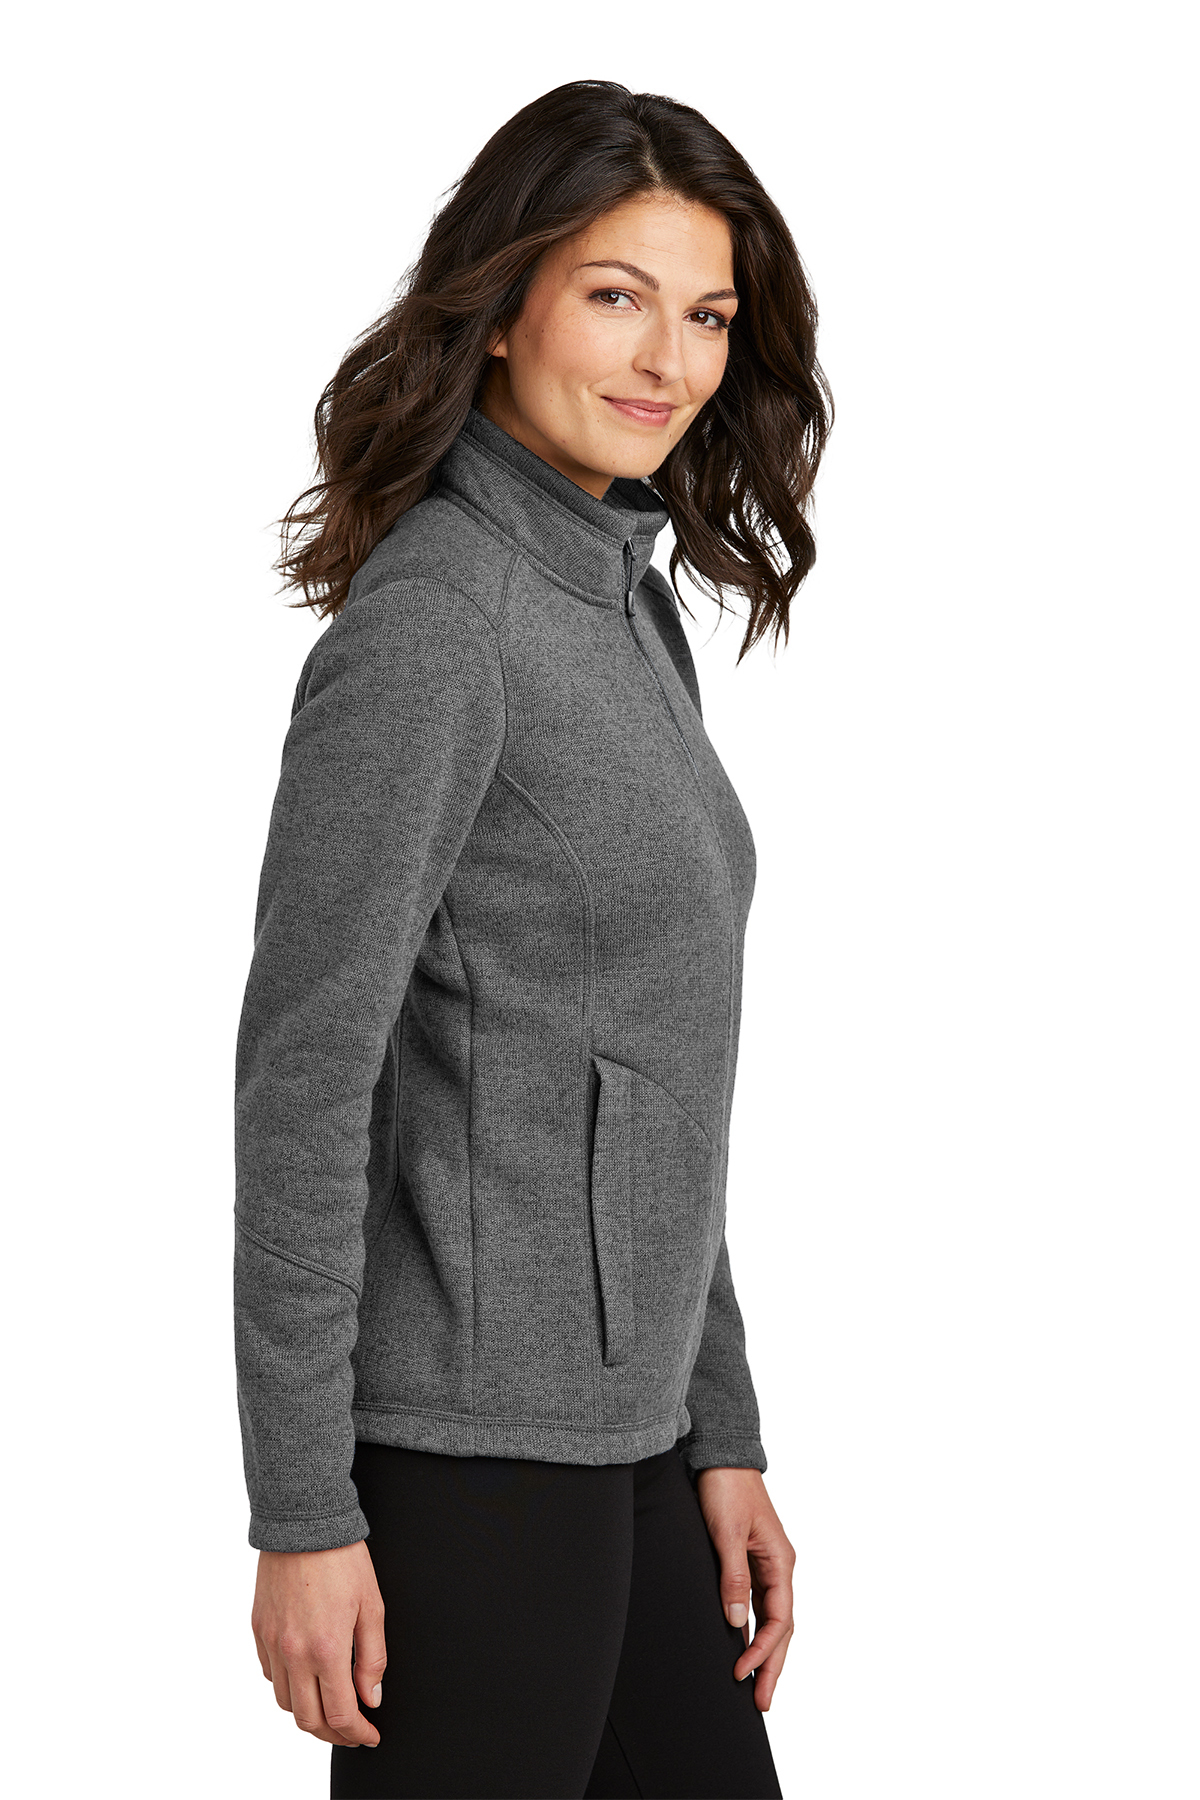 Sweater Ladies Arc Port Authority | Jacket Product Fleece Authority | Port